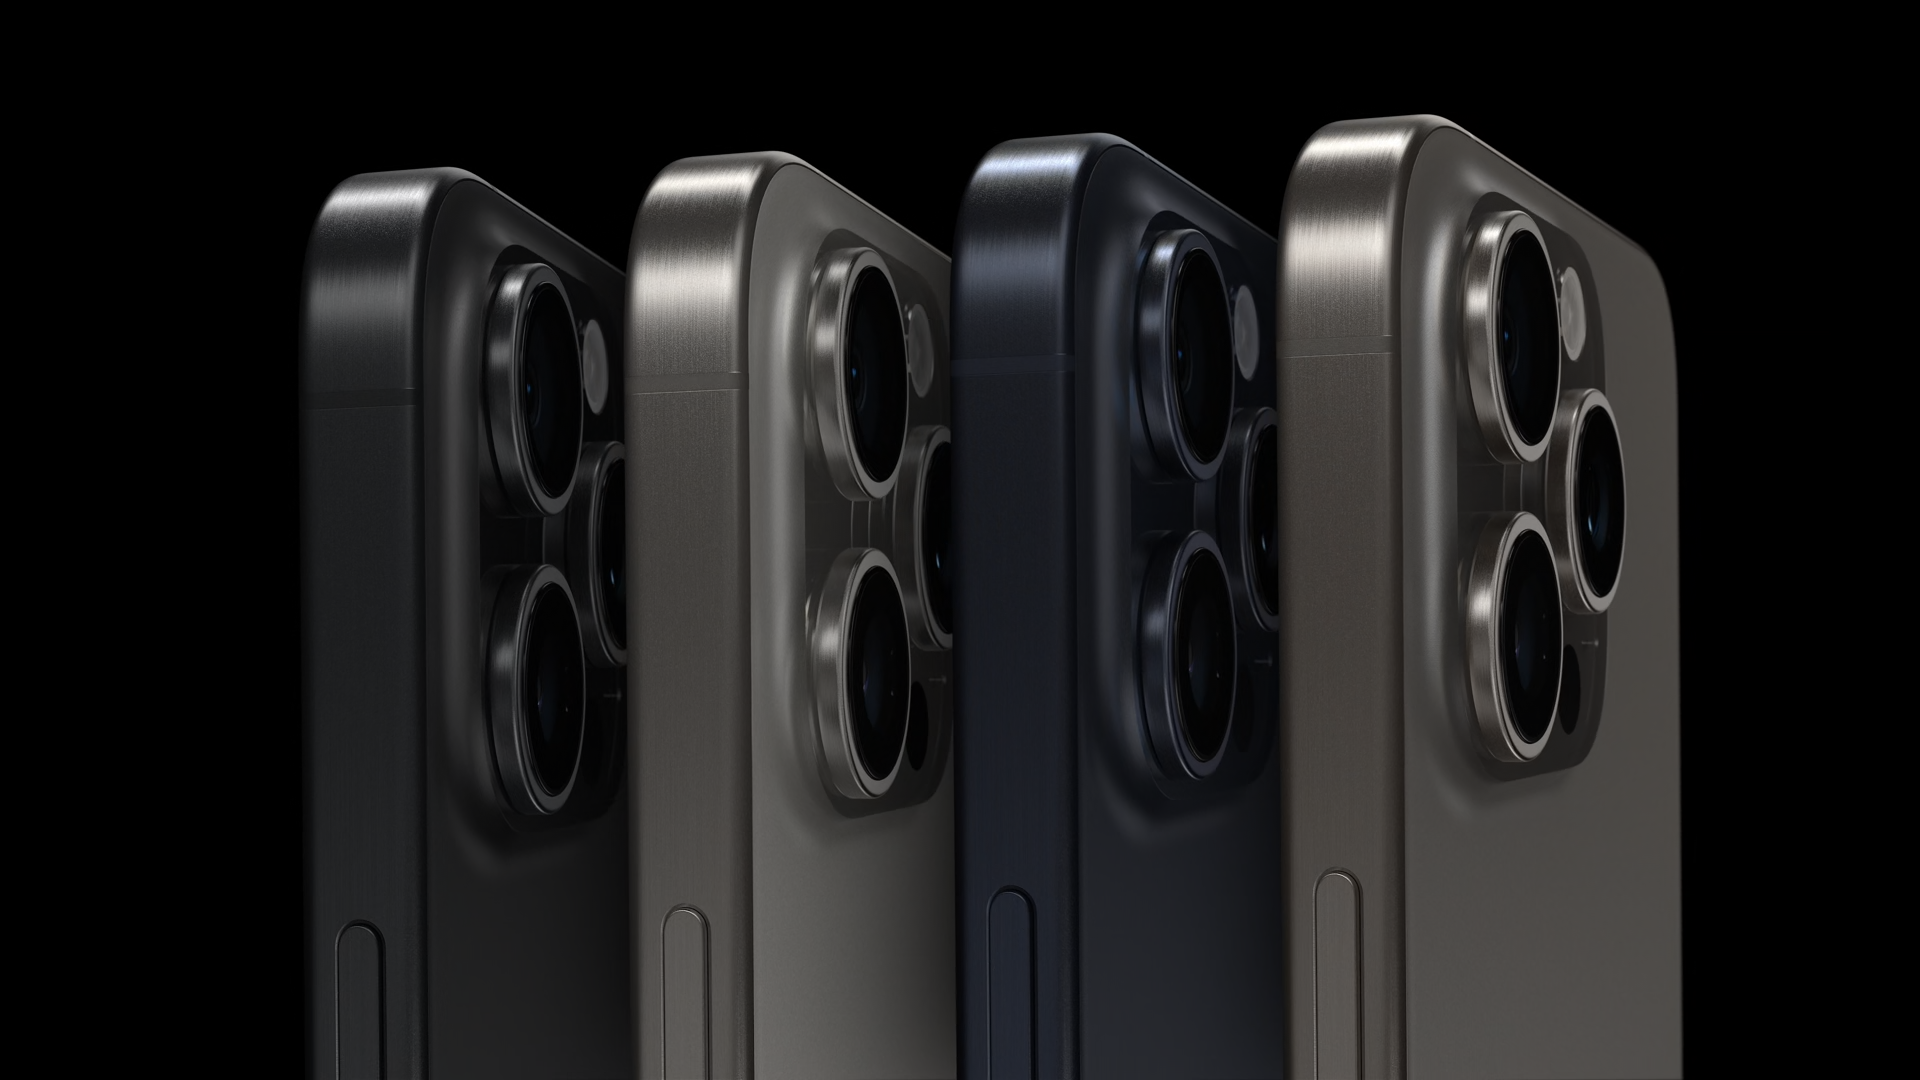 iPhone 15 Pro in all four new titanium finishes - black, white, blue, and natural titanium. Apple